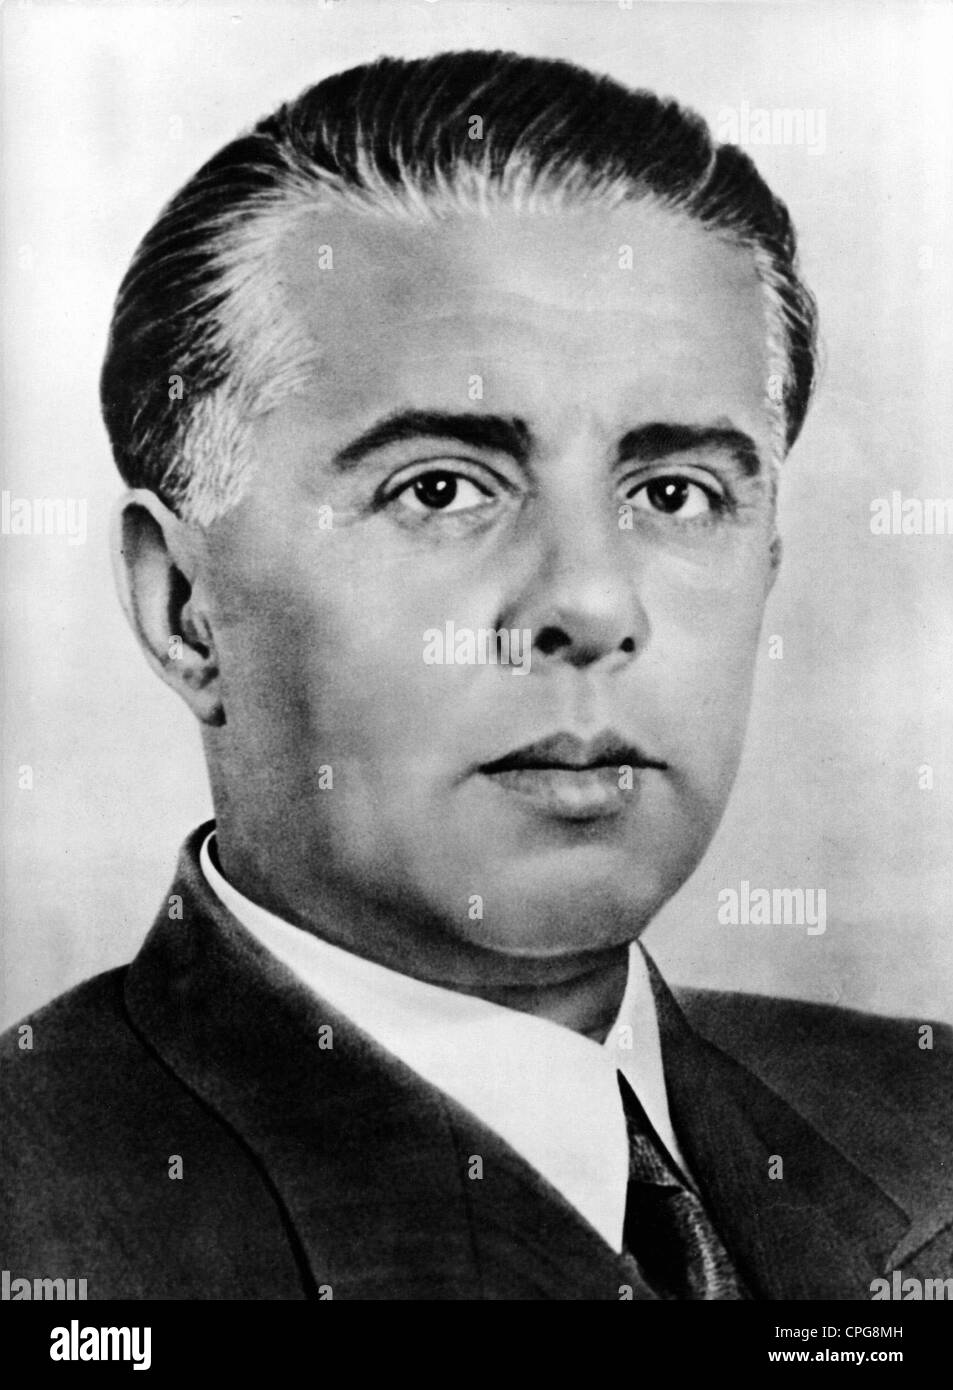 Hoxha